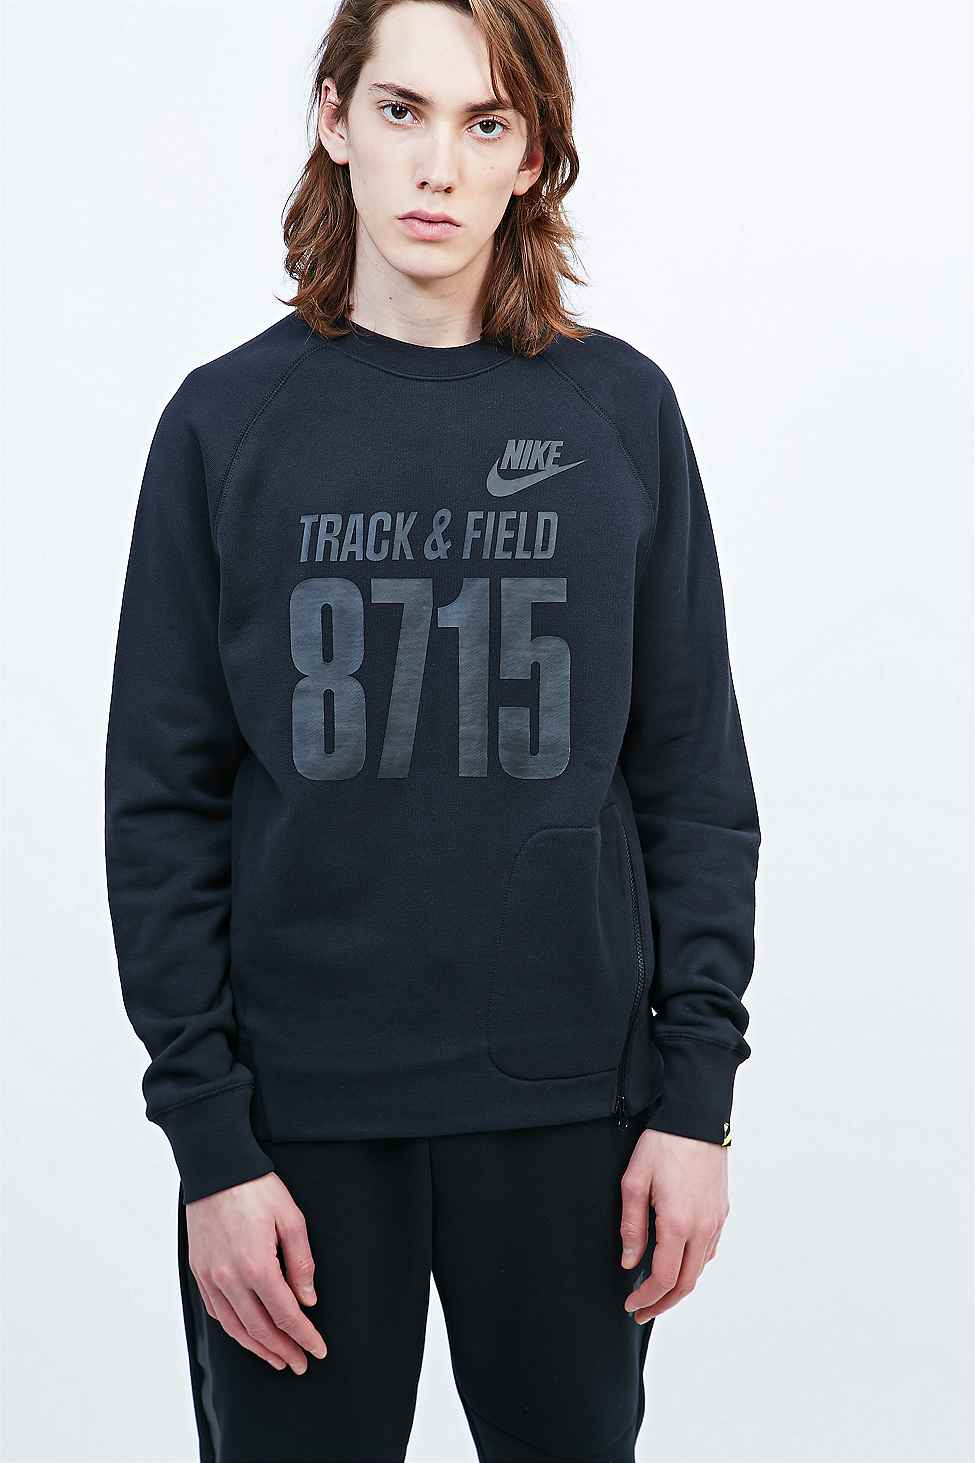 Nike Track And Field 8715 Sweatshirt In Black for Men - Lyst